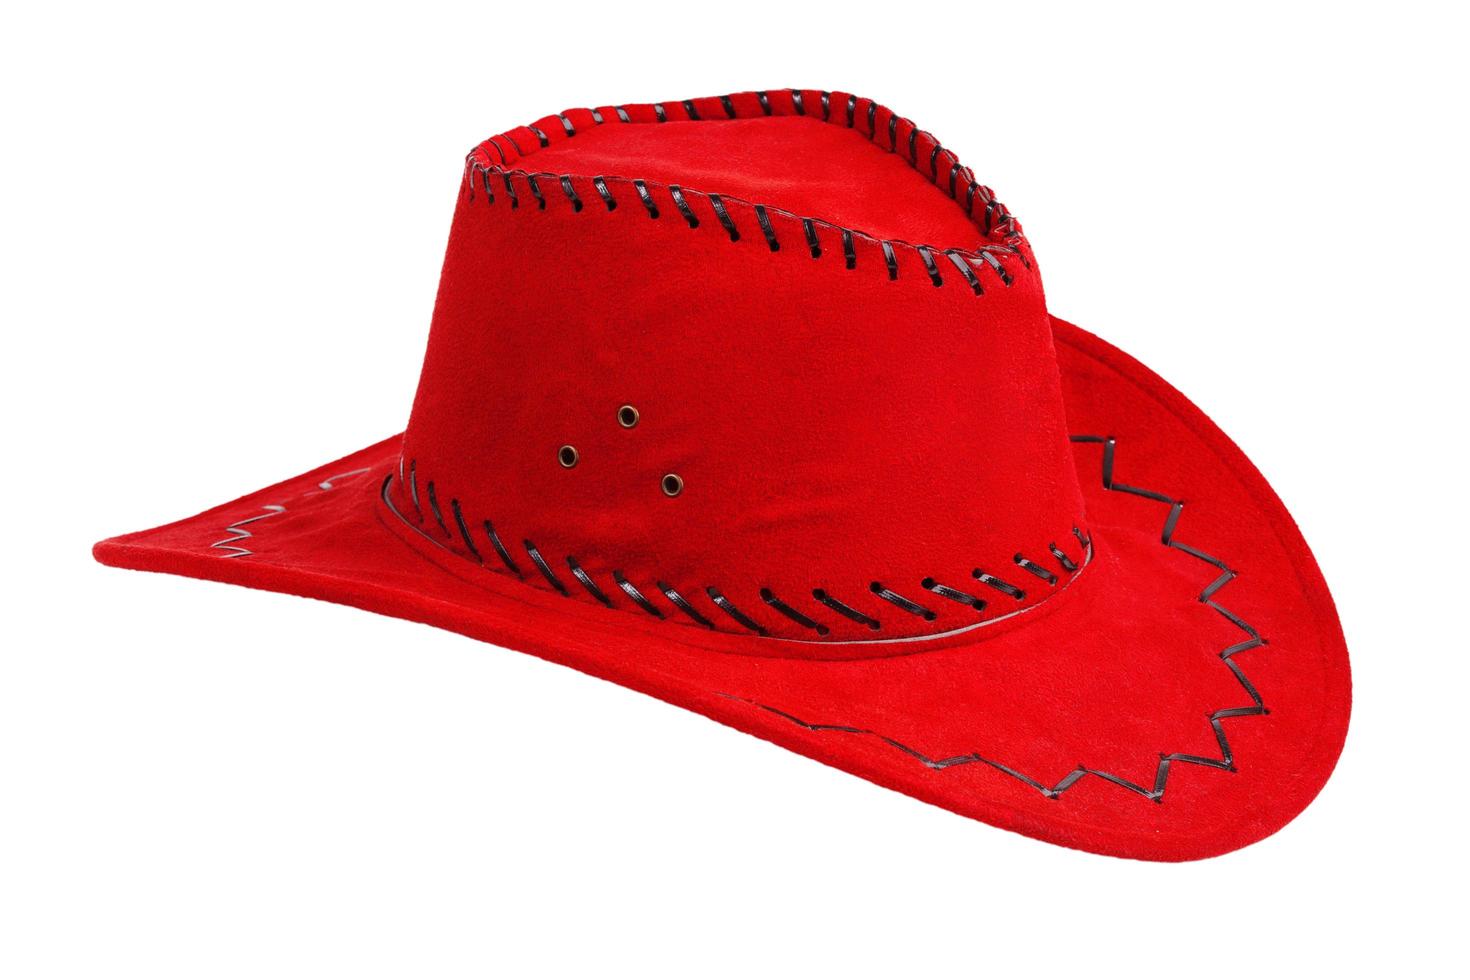 Red cowboy hat photo